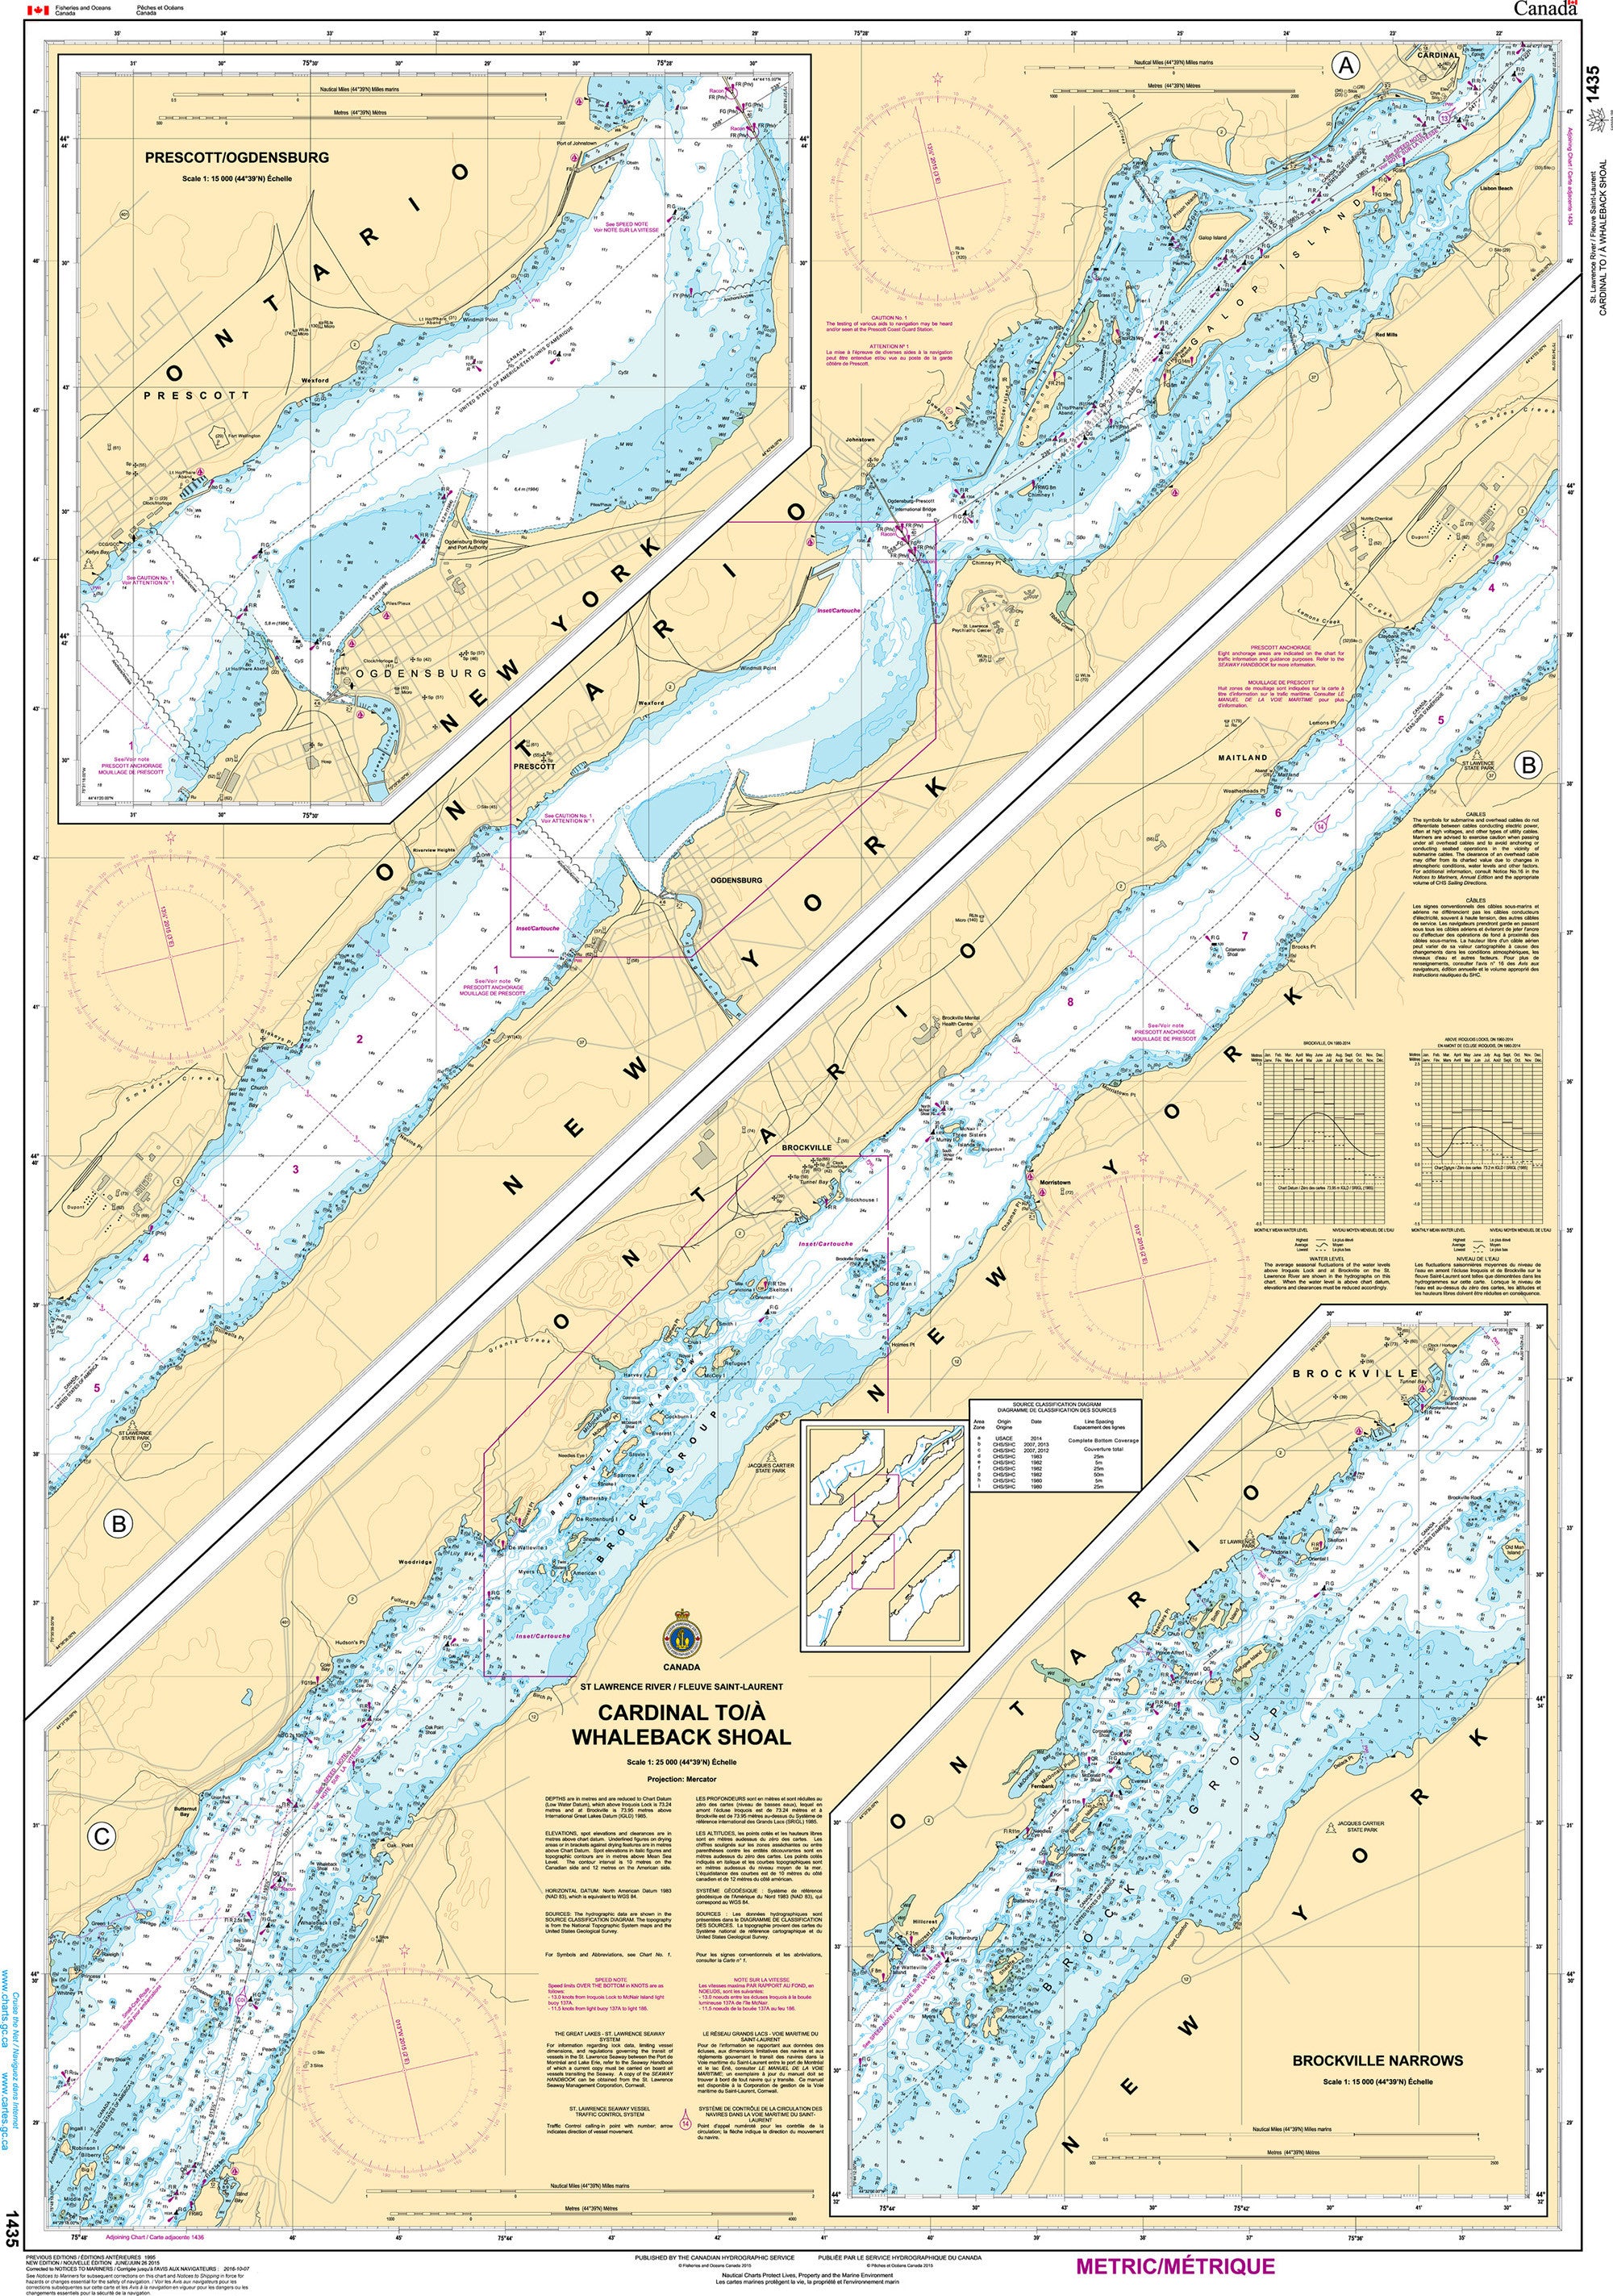 Canadian Hydrographic Service Nautical Chart CHS1435: Cardinal to/à Whaleback Shoal